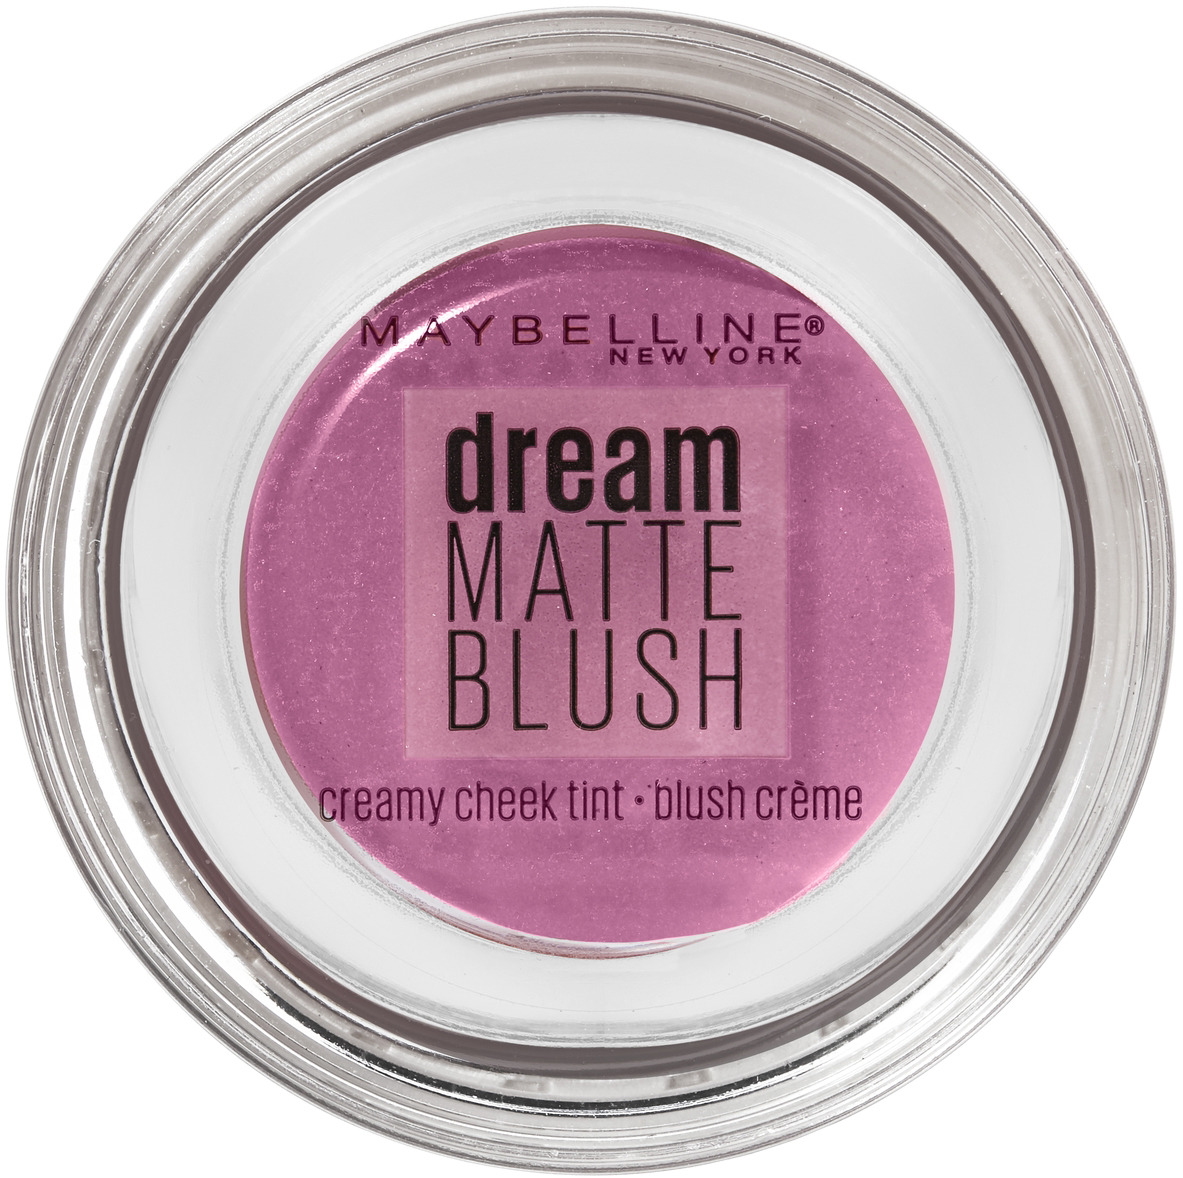 Румяна Maybelline New York Face Studio Dream Matte Blush, оттенок 40, розовато-лиловый, 6 г